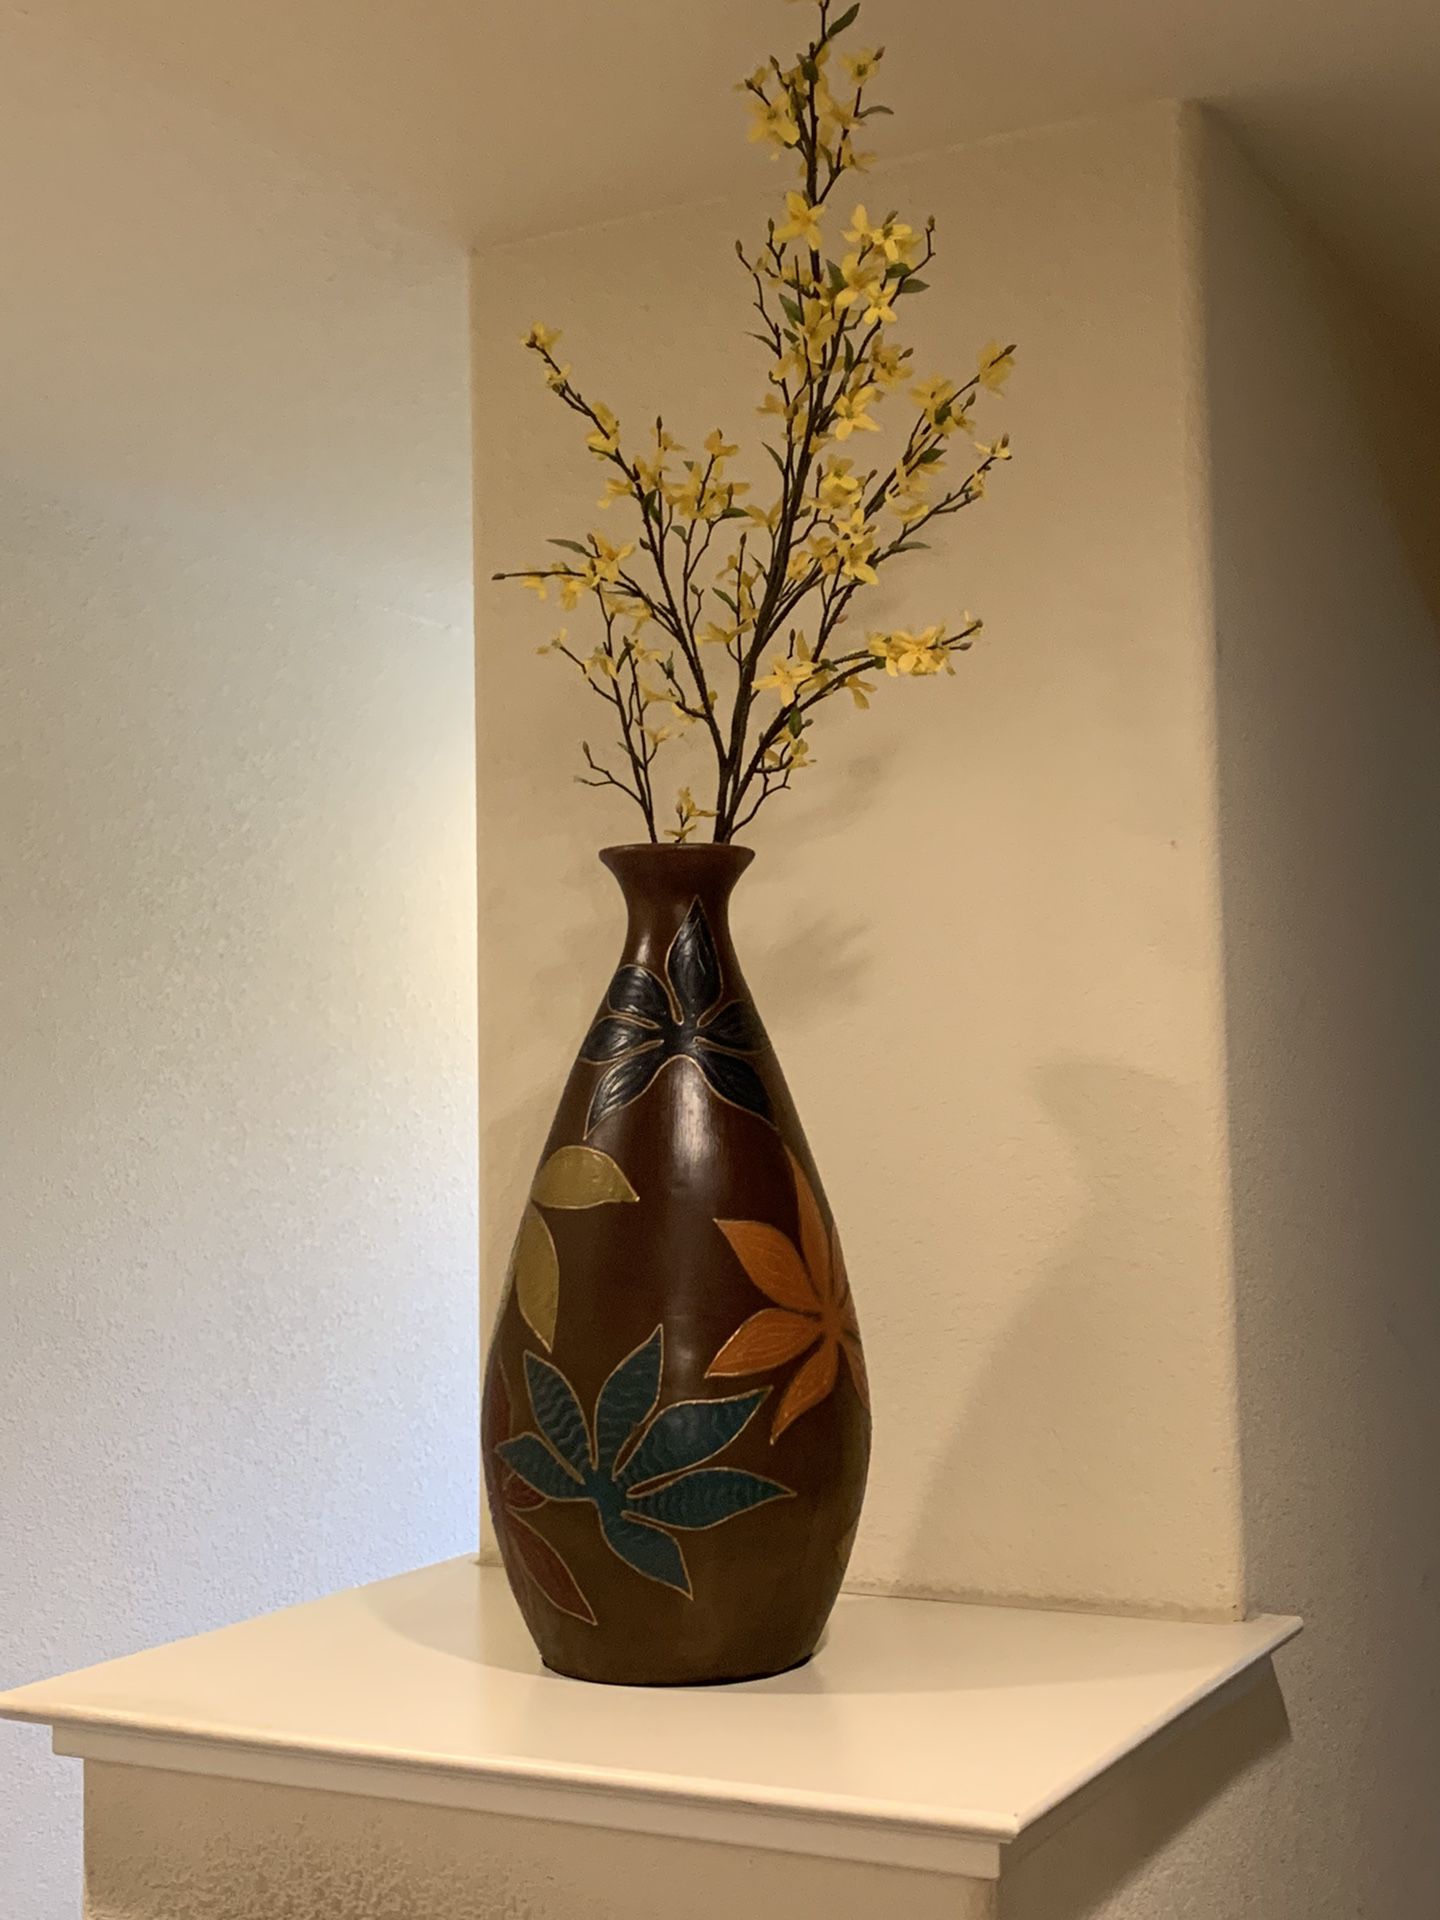 Flower Vase (flowers included)